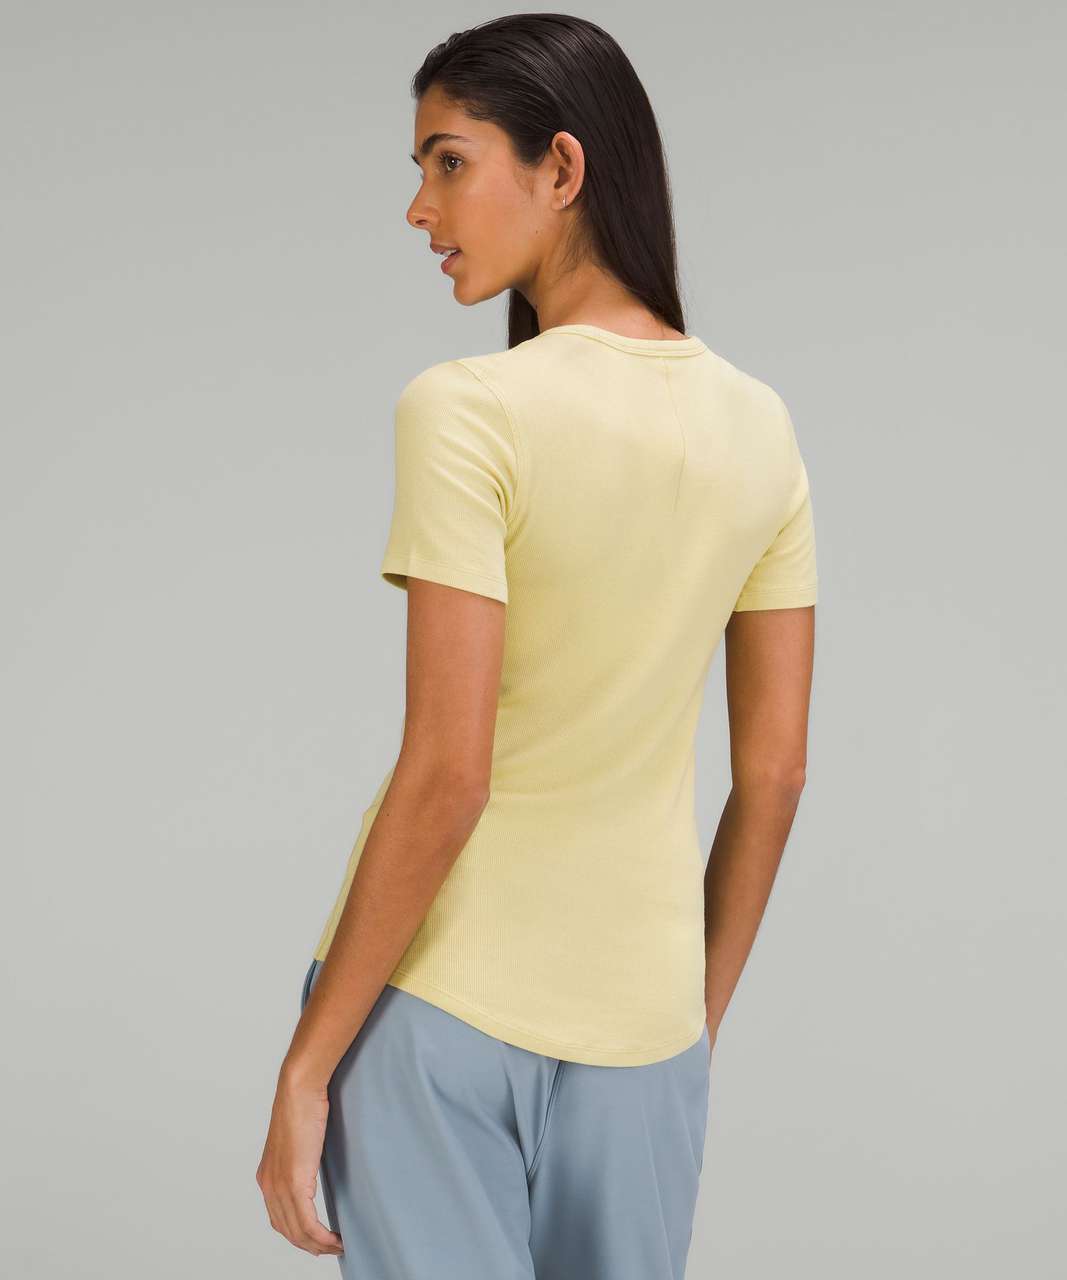 Lululemon Hold Tight Short Sleeve Shirt - Finch Yellow